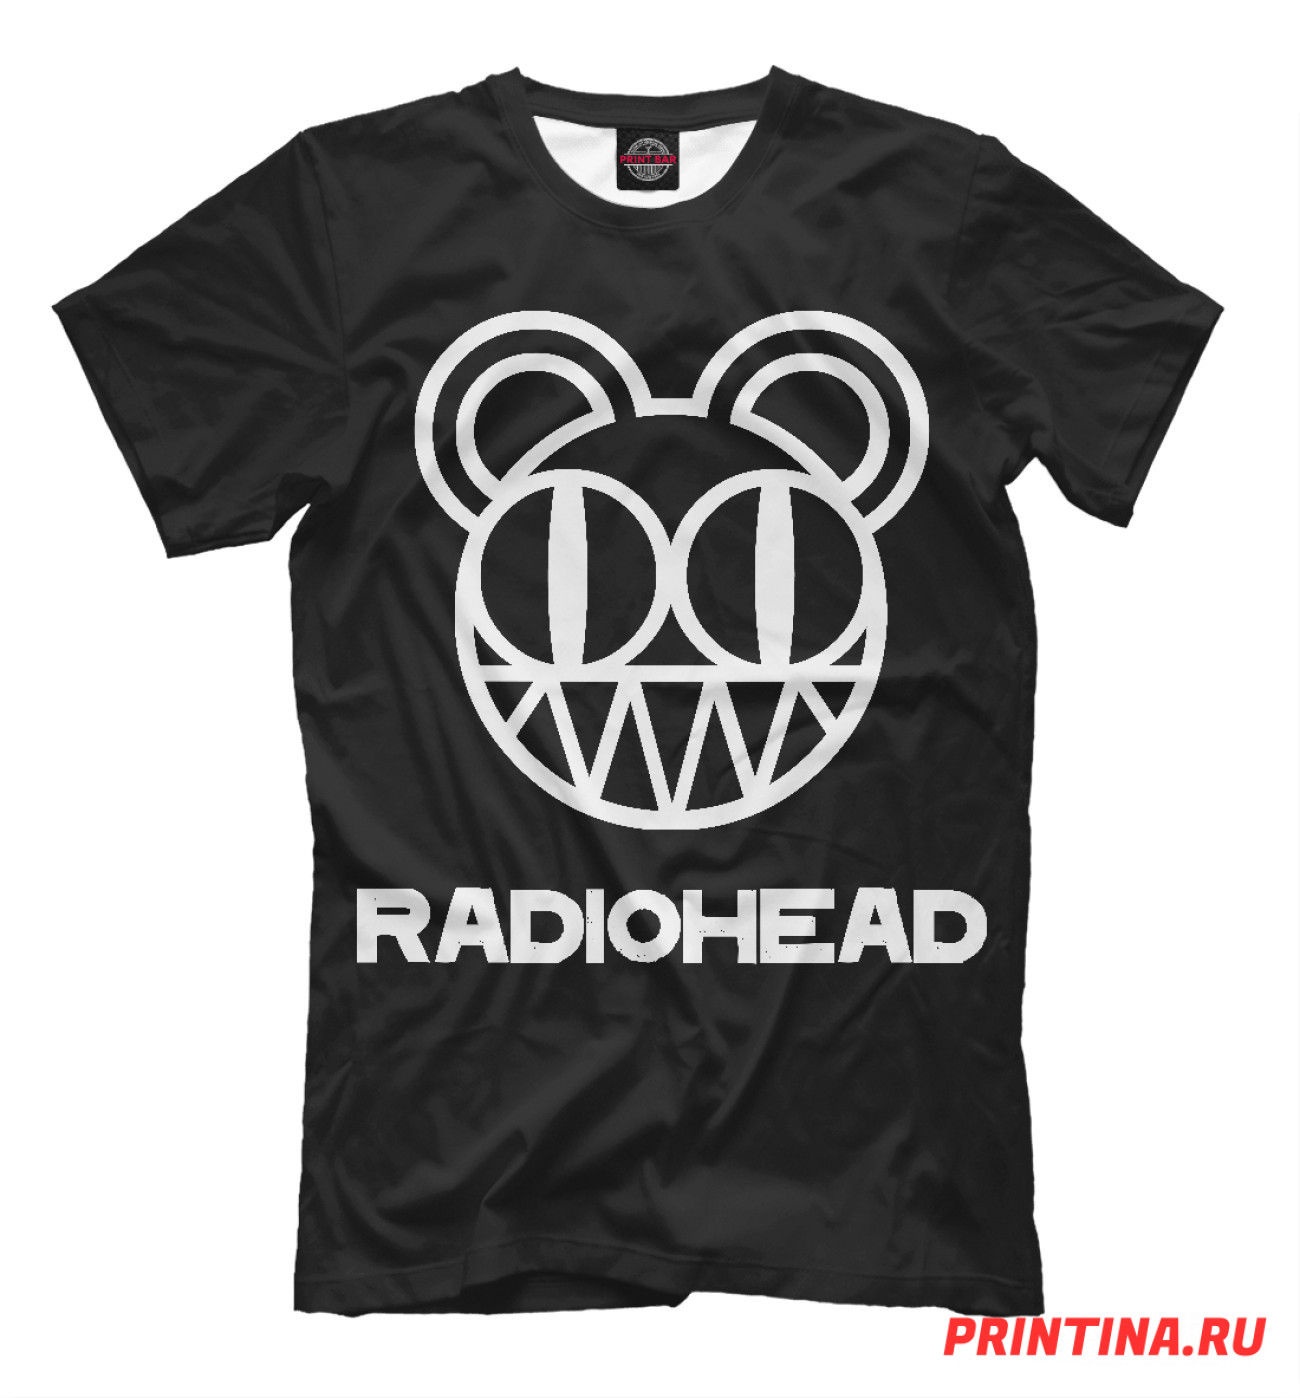 Мужская Футболка Radiohead, артикул: MZK-692916-fut-2